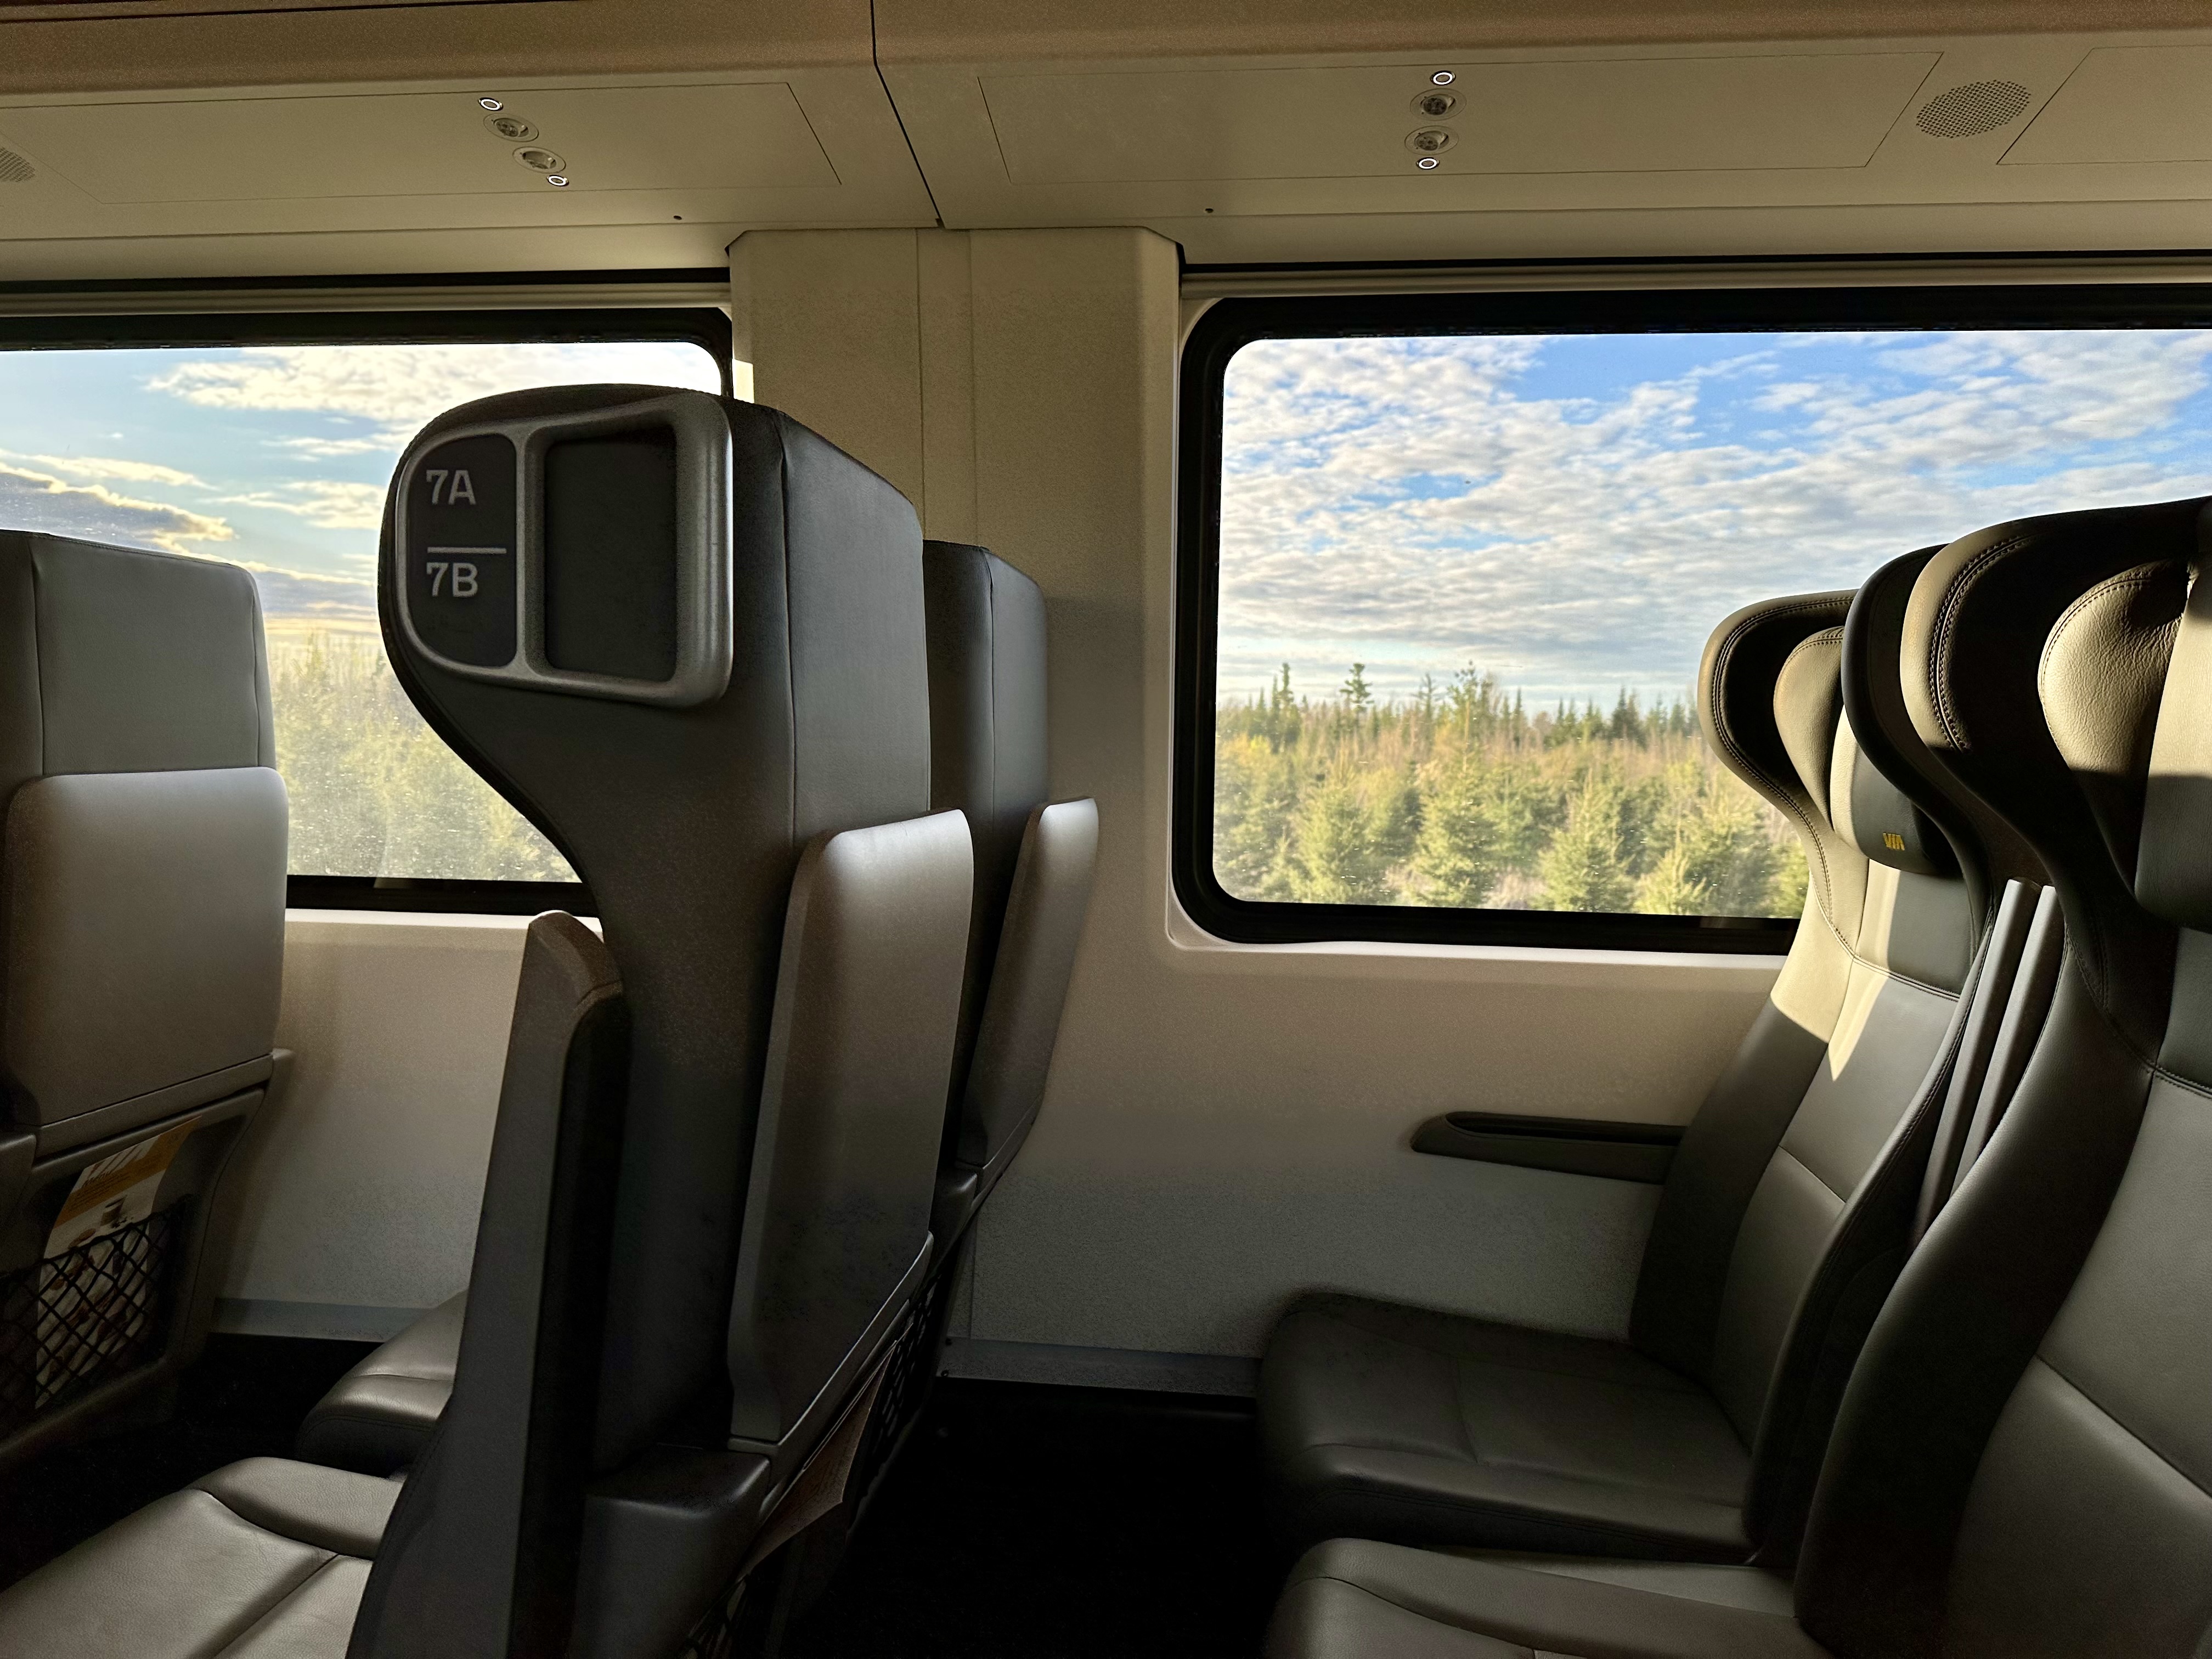 a VIA Rail Train with seats and windows